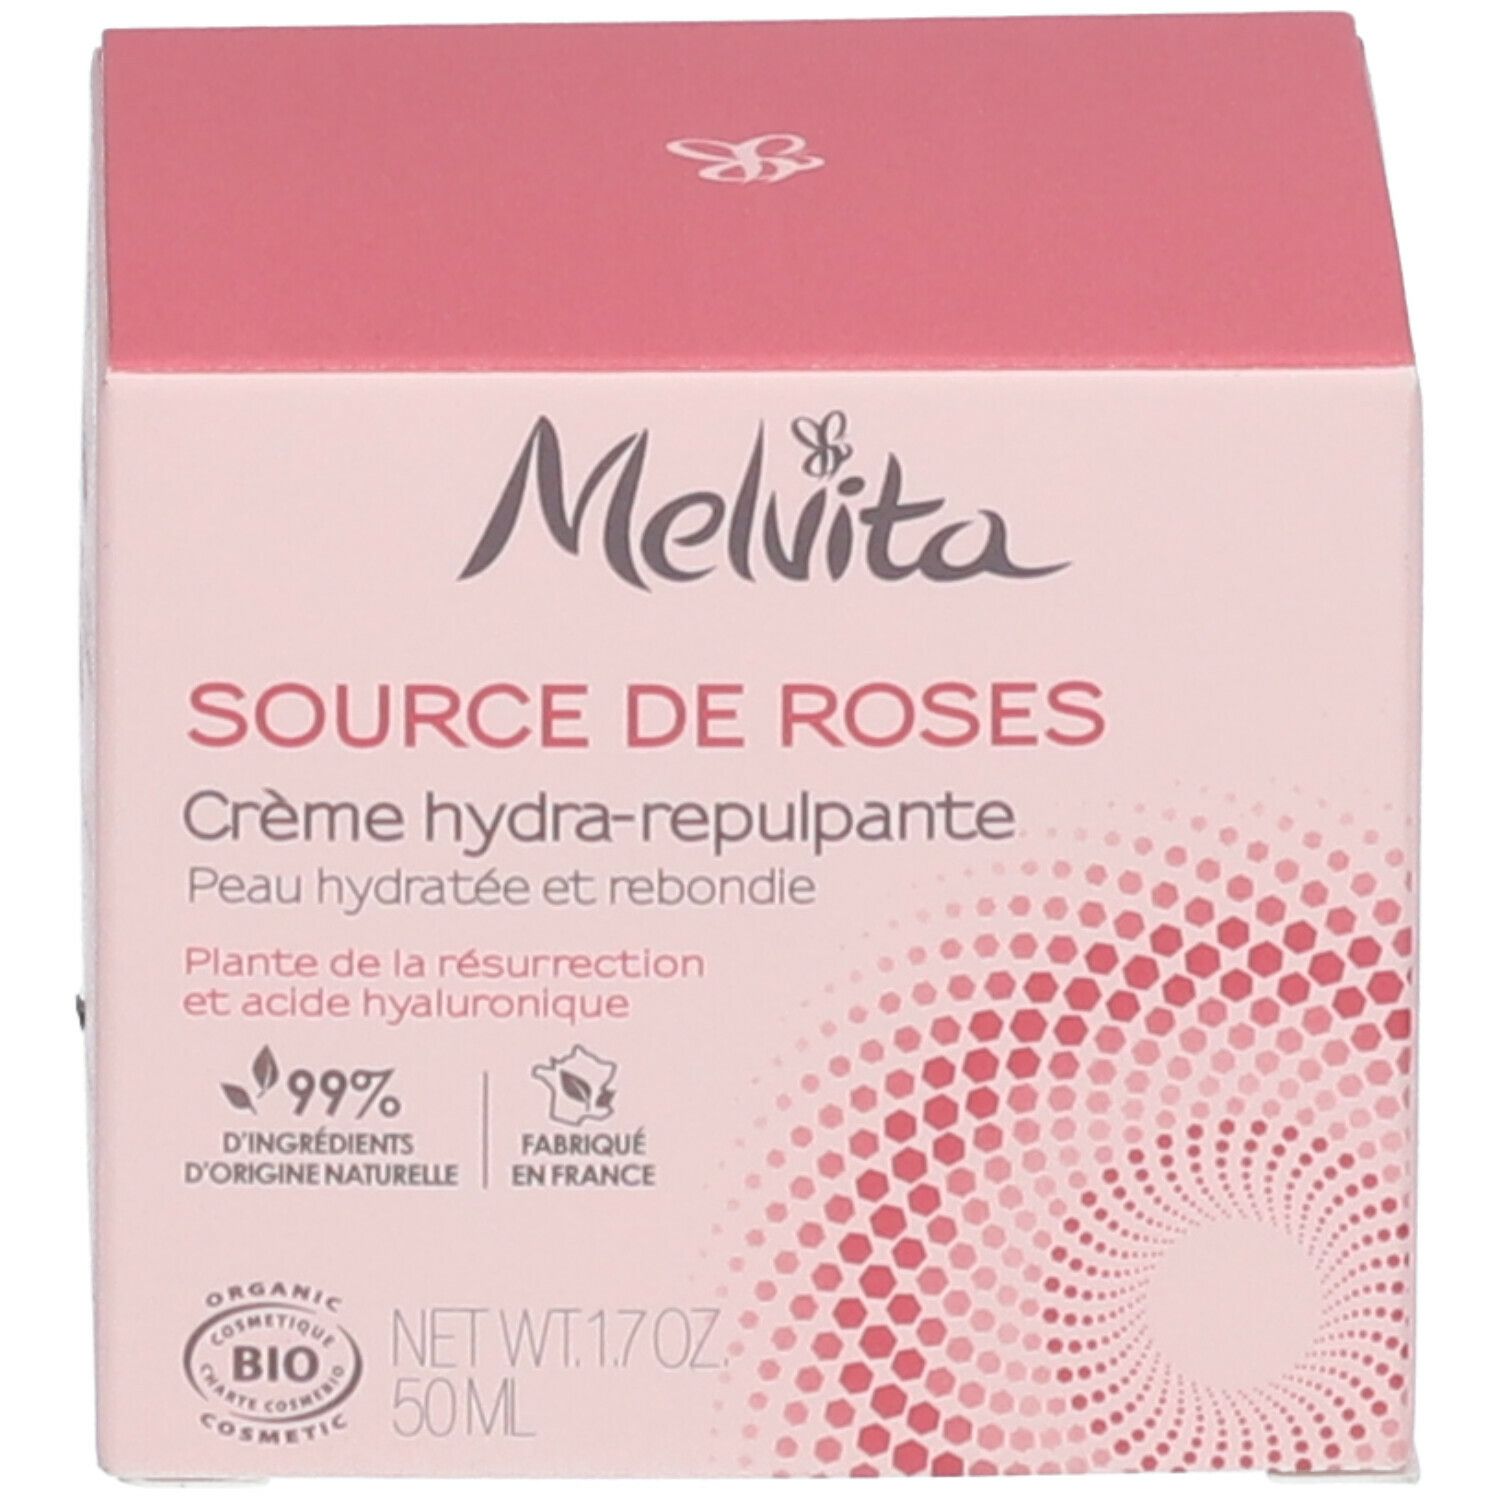 Melvita Crème hydratante repulpante Source de Roses